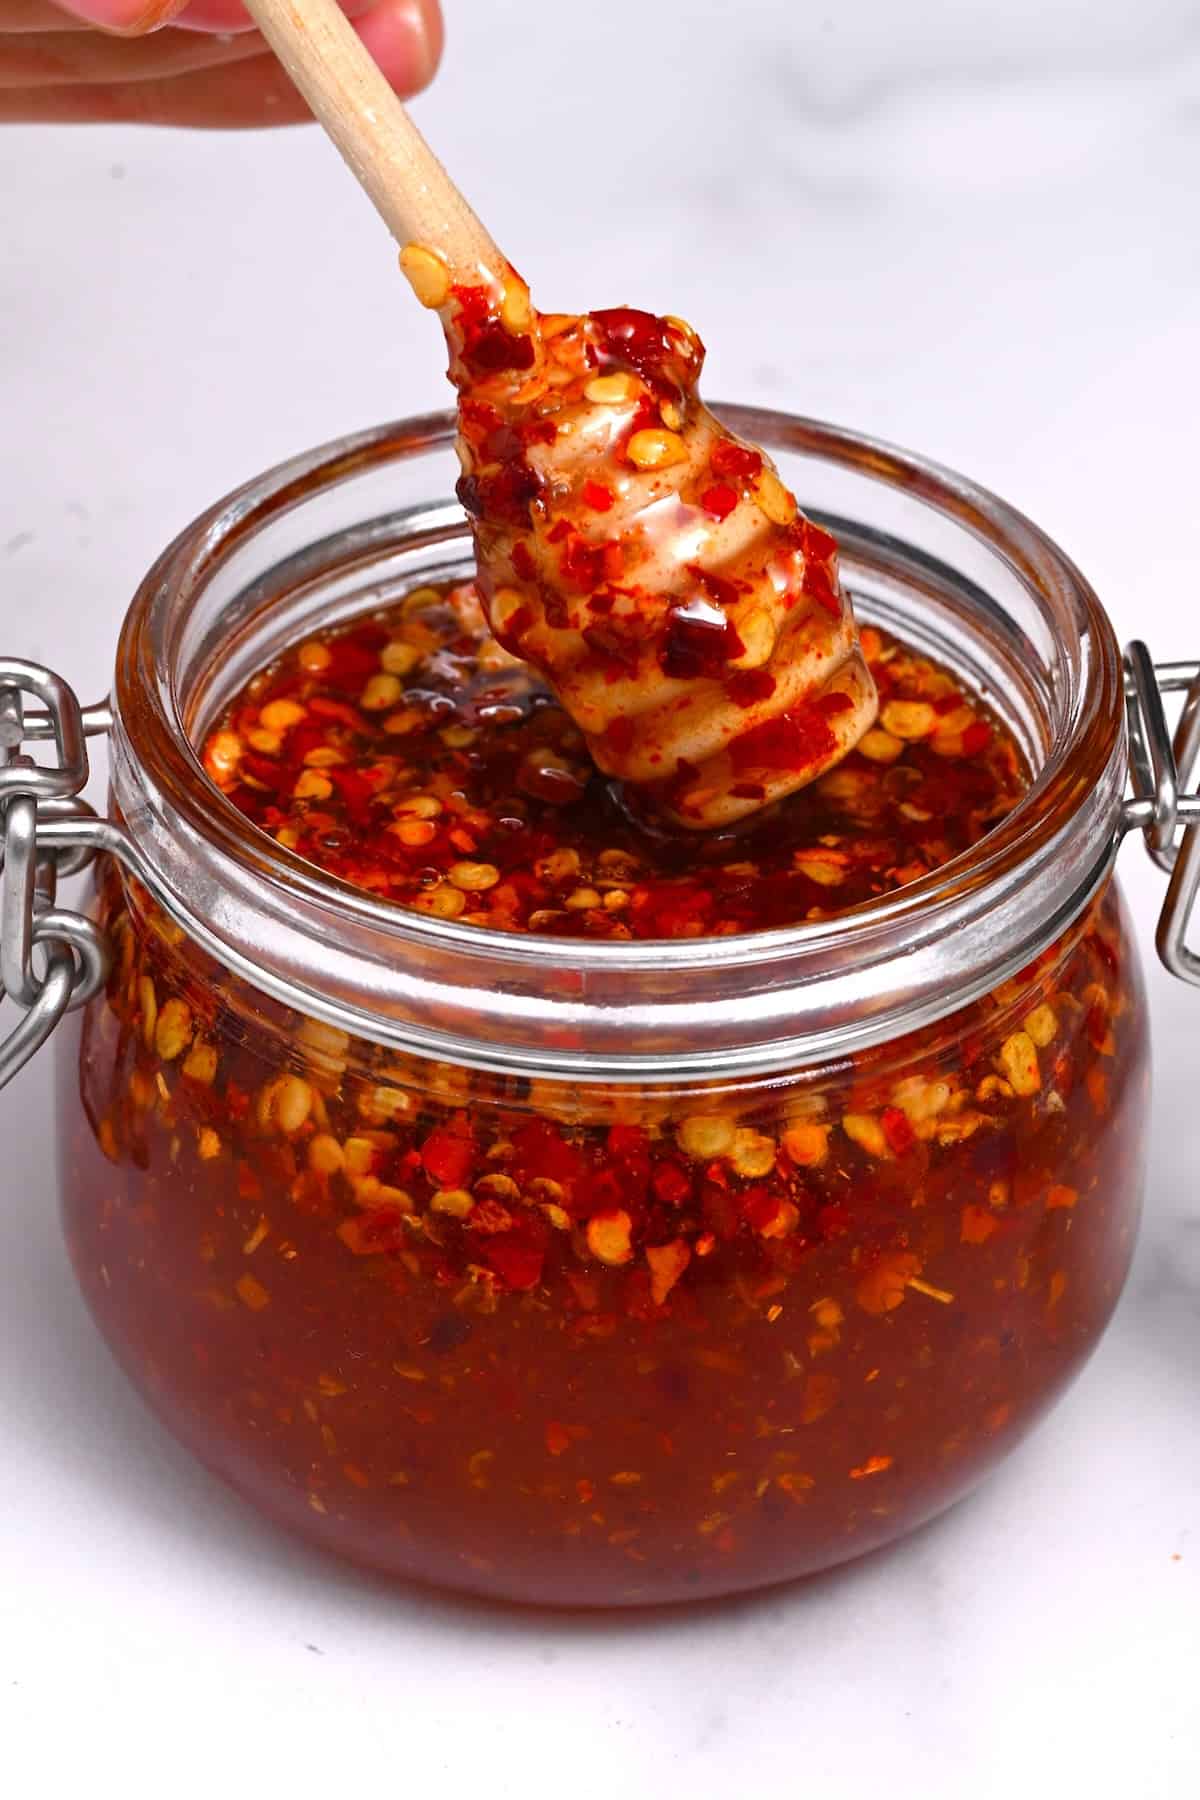 Homemade hot honeh in a small jar